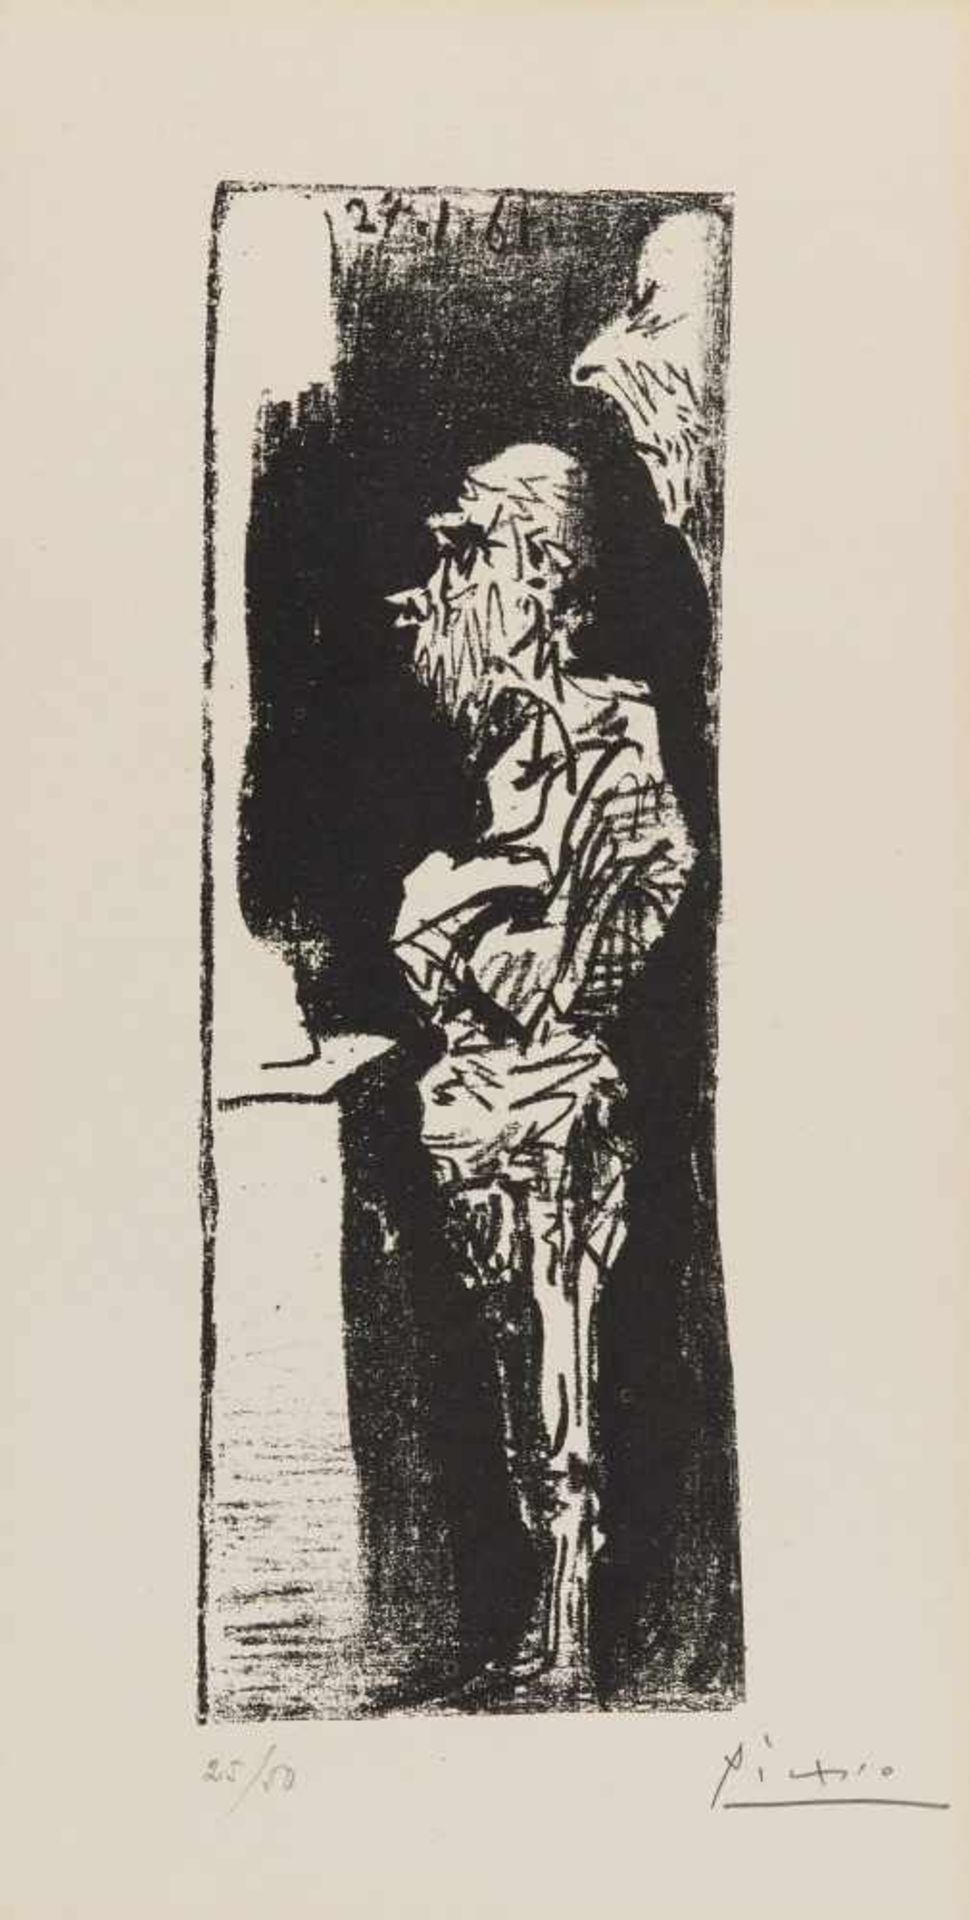 Picasso, Pablo1881 Malaga - 1973 MouginsEspectadores. 1961. Lithografie auf Velin. 29,3 x 10,5cm (